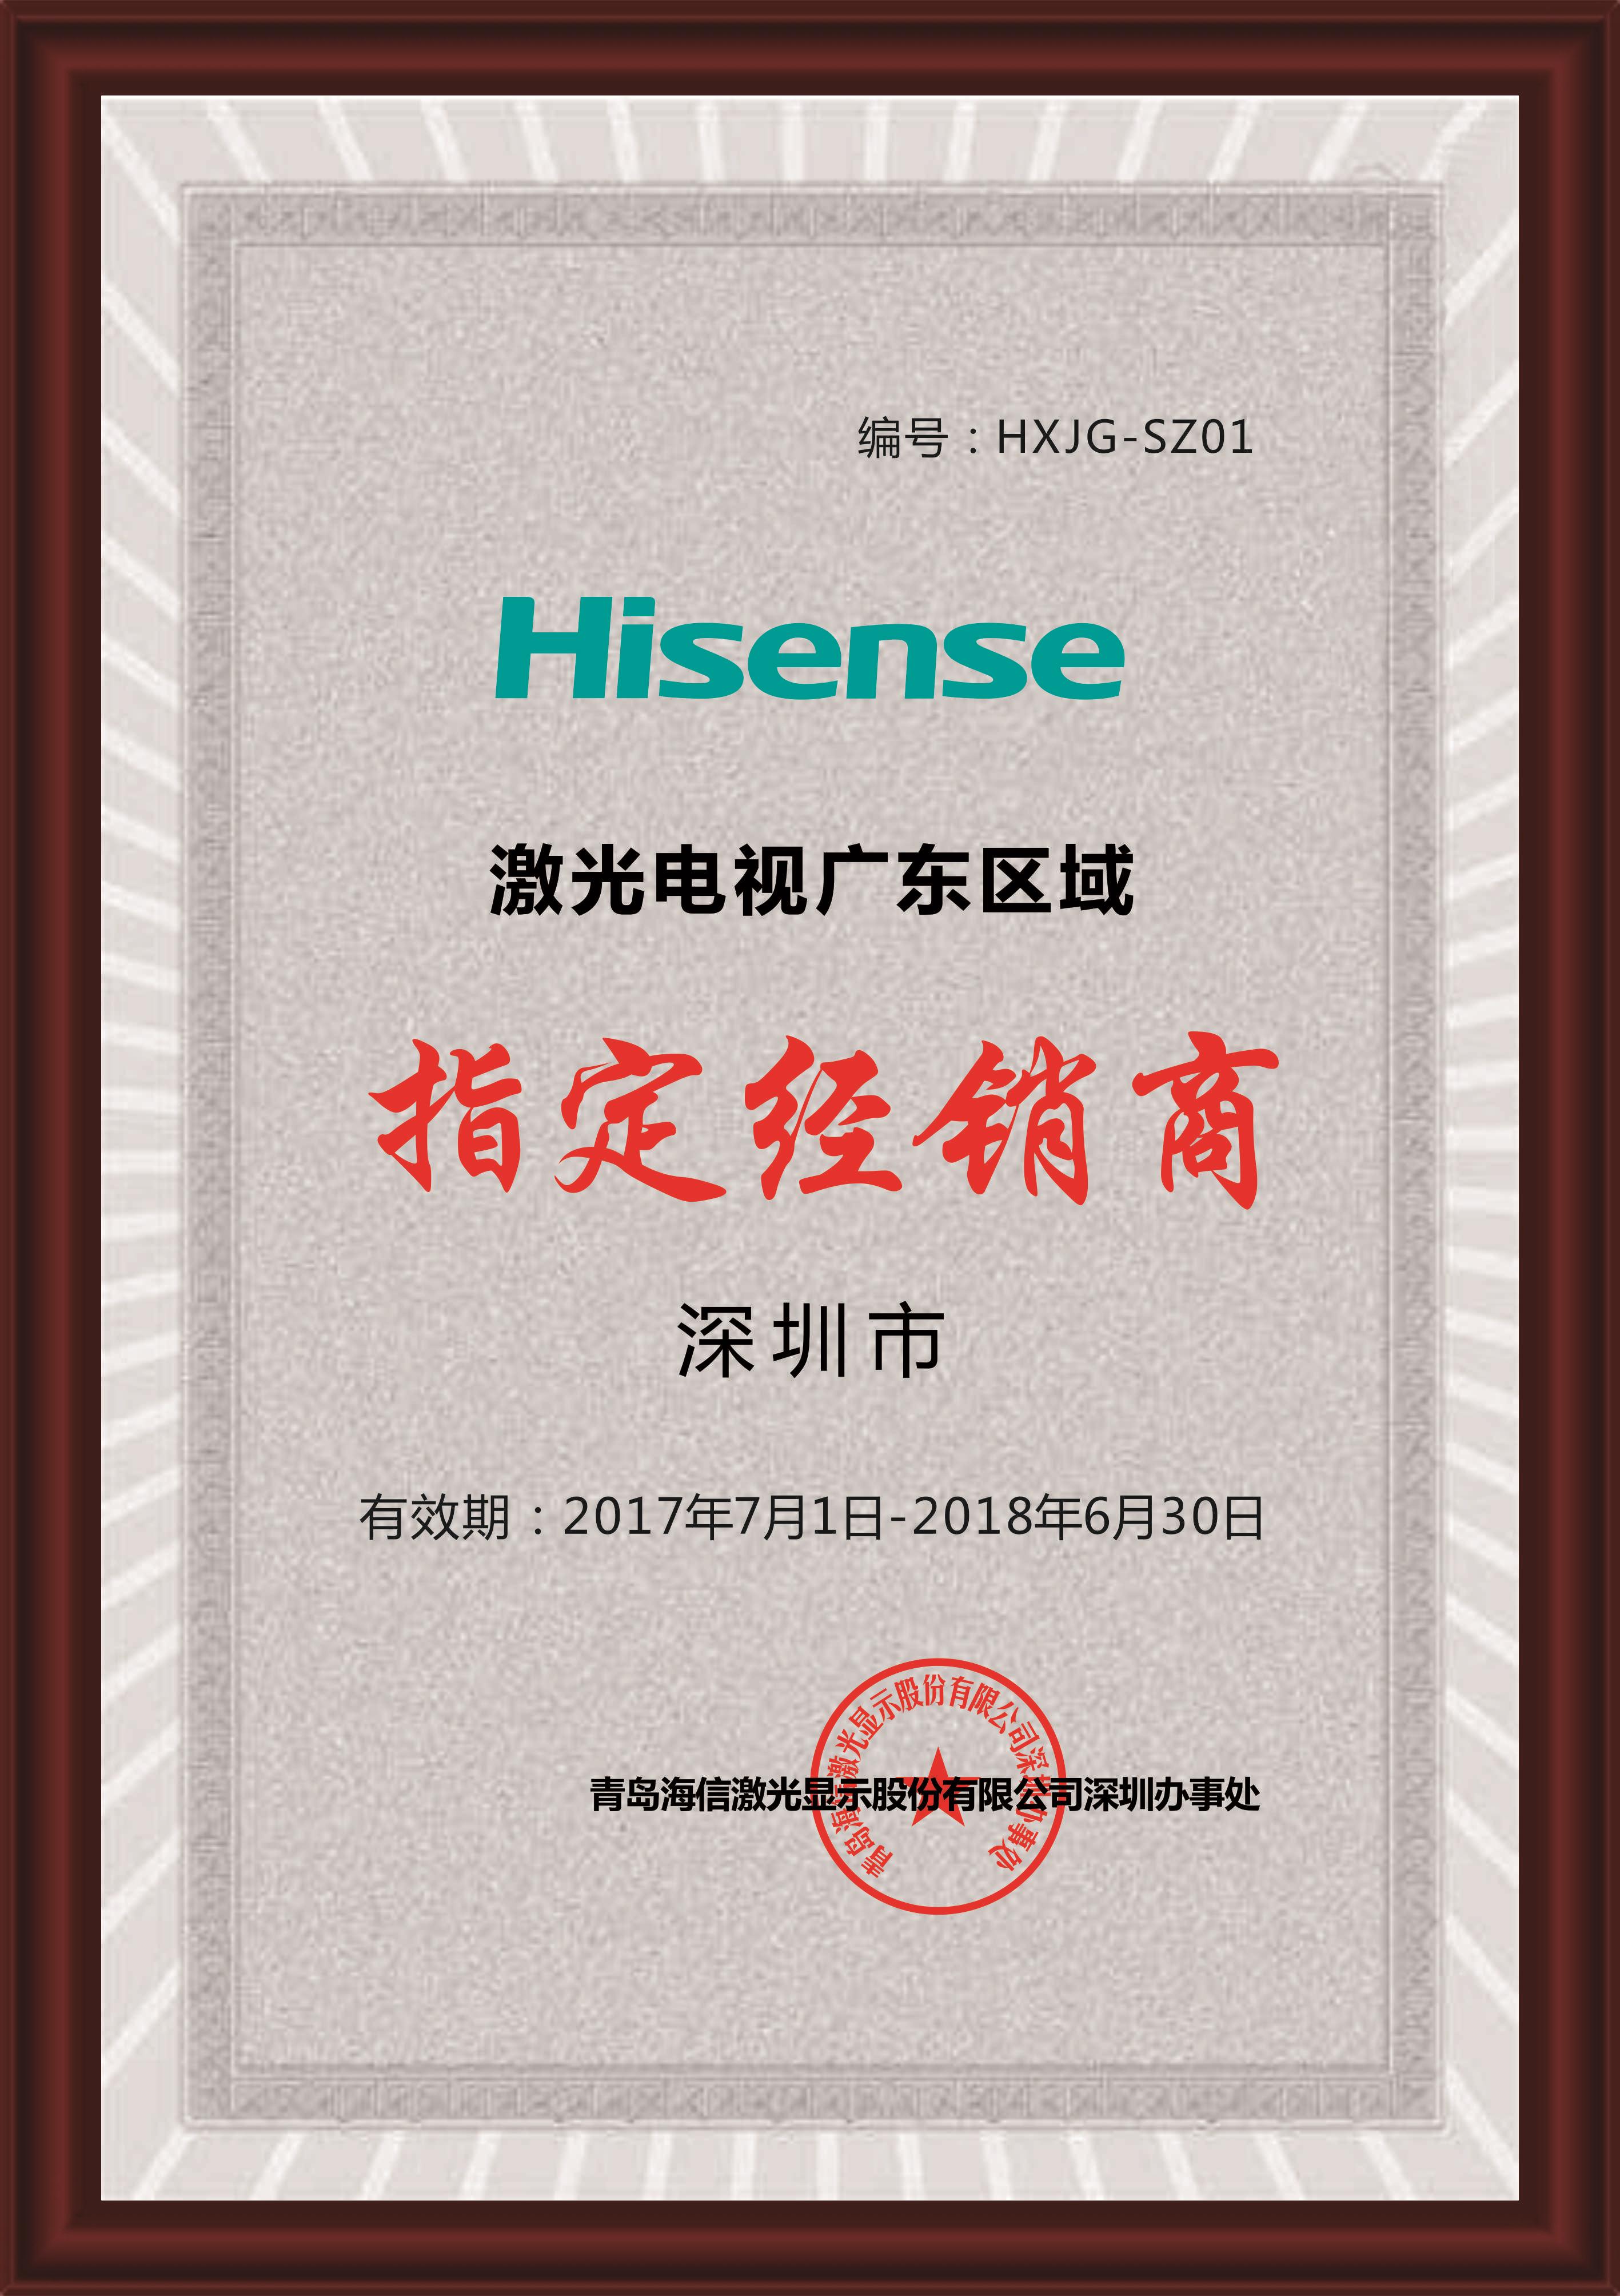 Hisense激光电视广东深圳市区域指定经销商